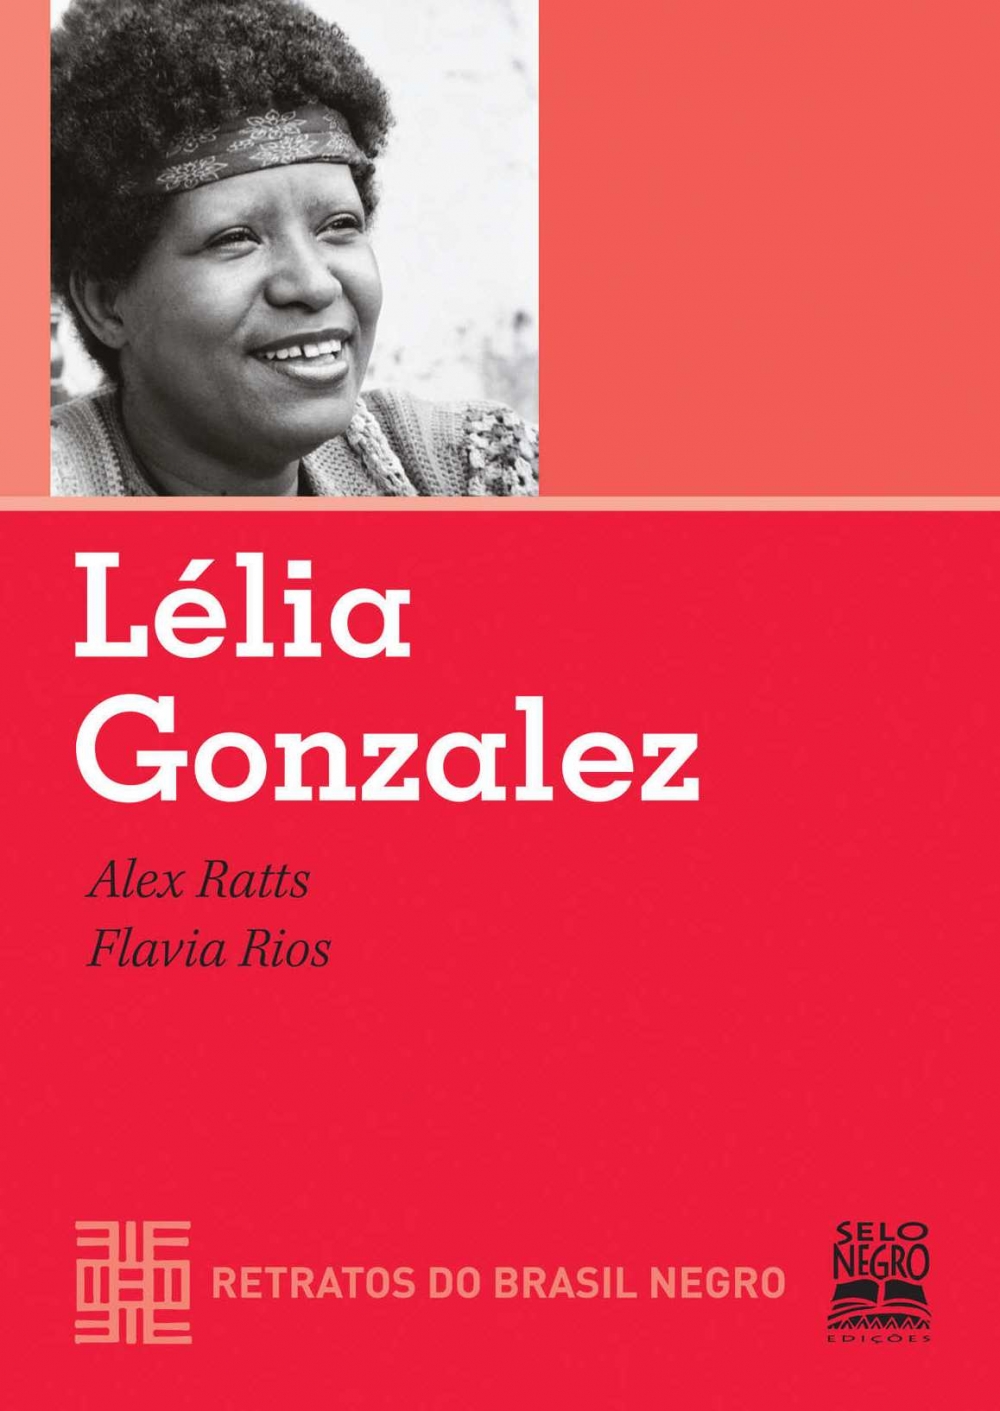 Lélia Gonzalez